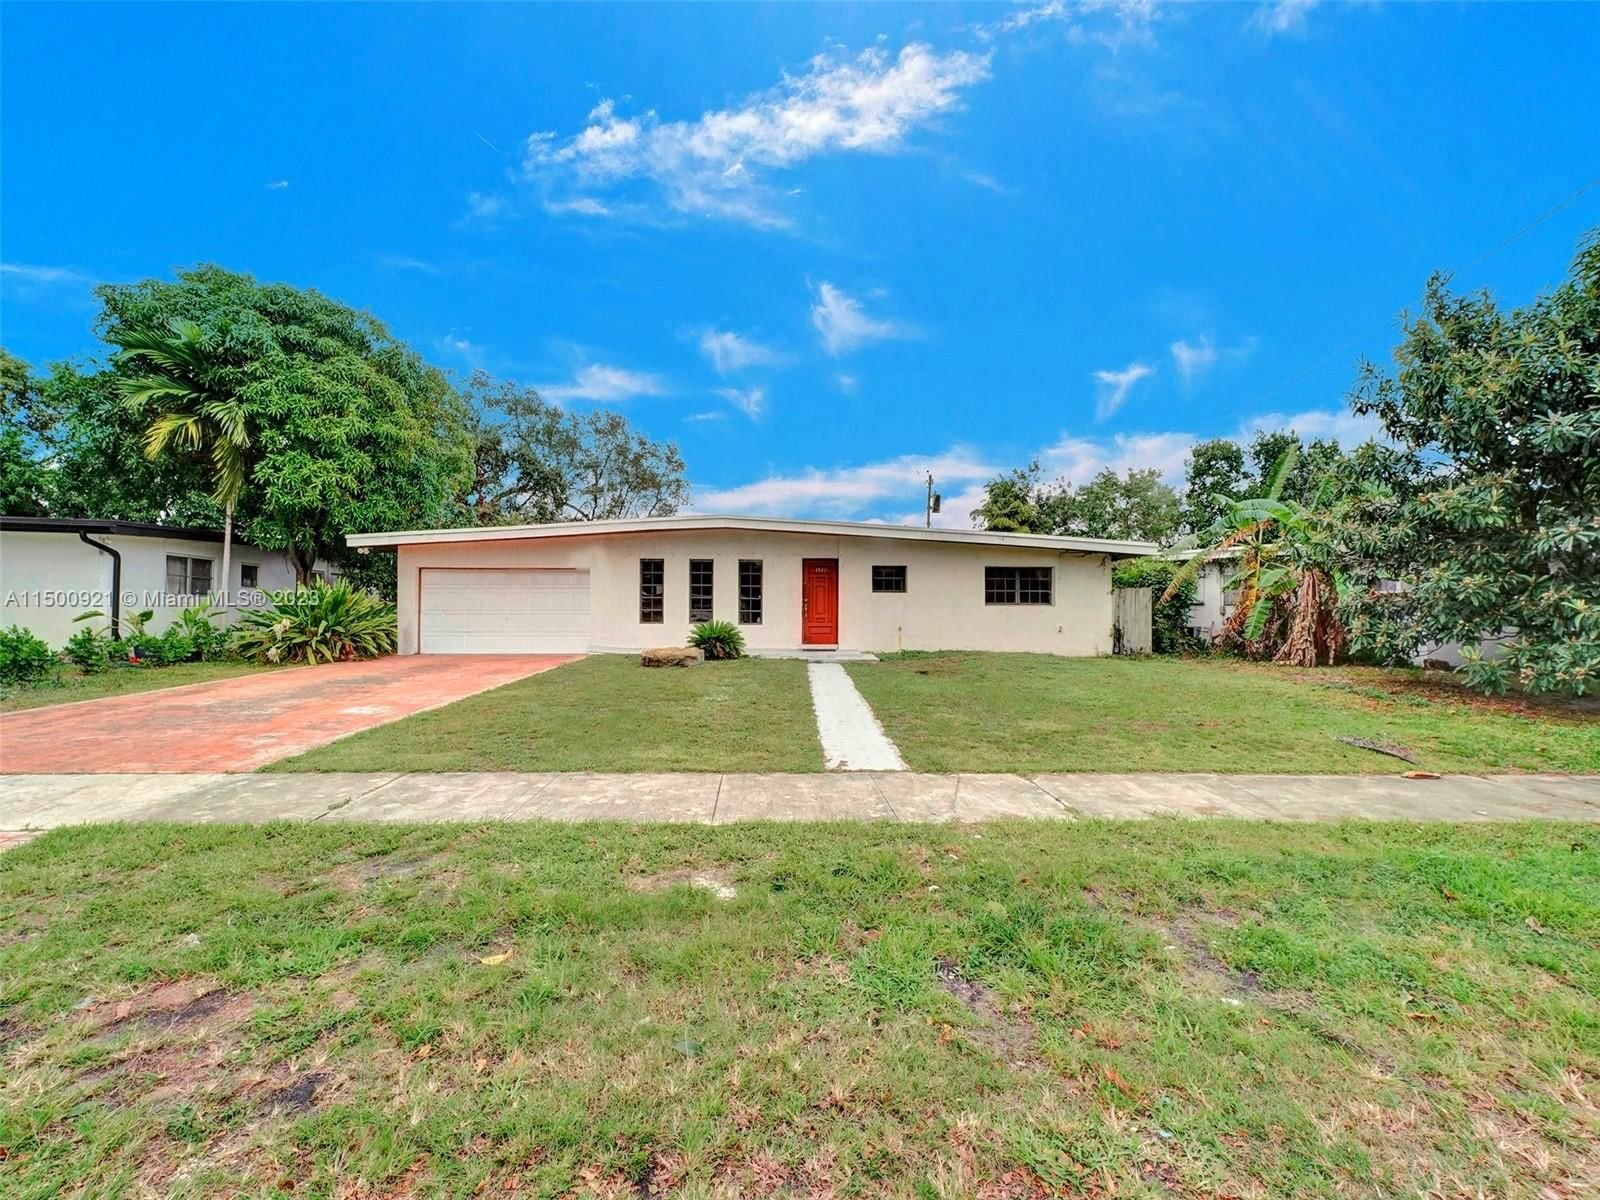 Real estate property located at 1941 186th Dr, Miami-Dade County, SKY LAKE, North Miami Beach, FL